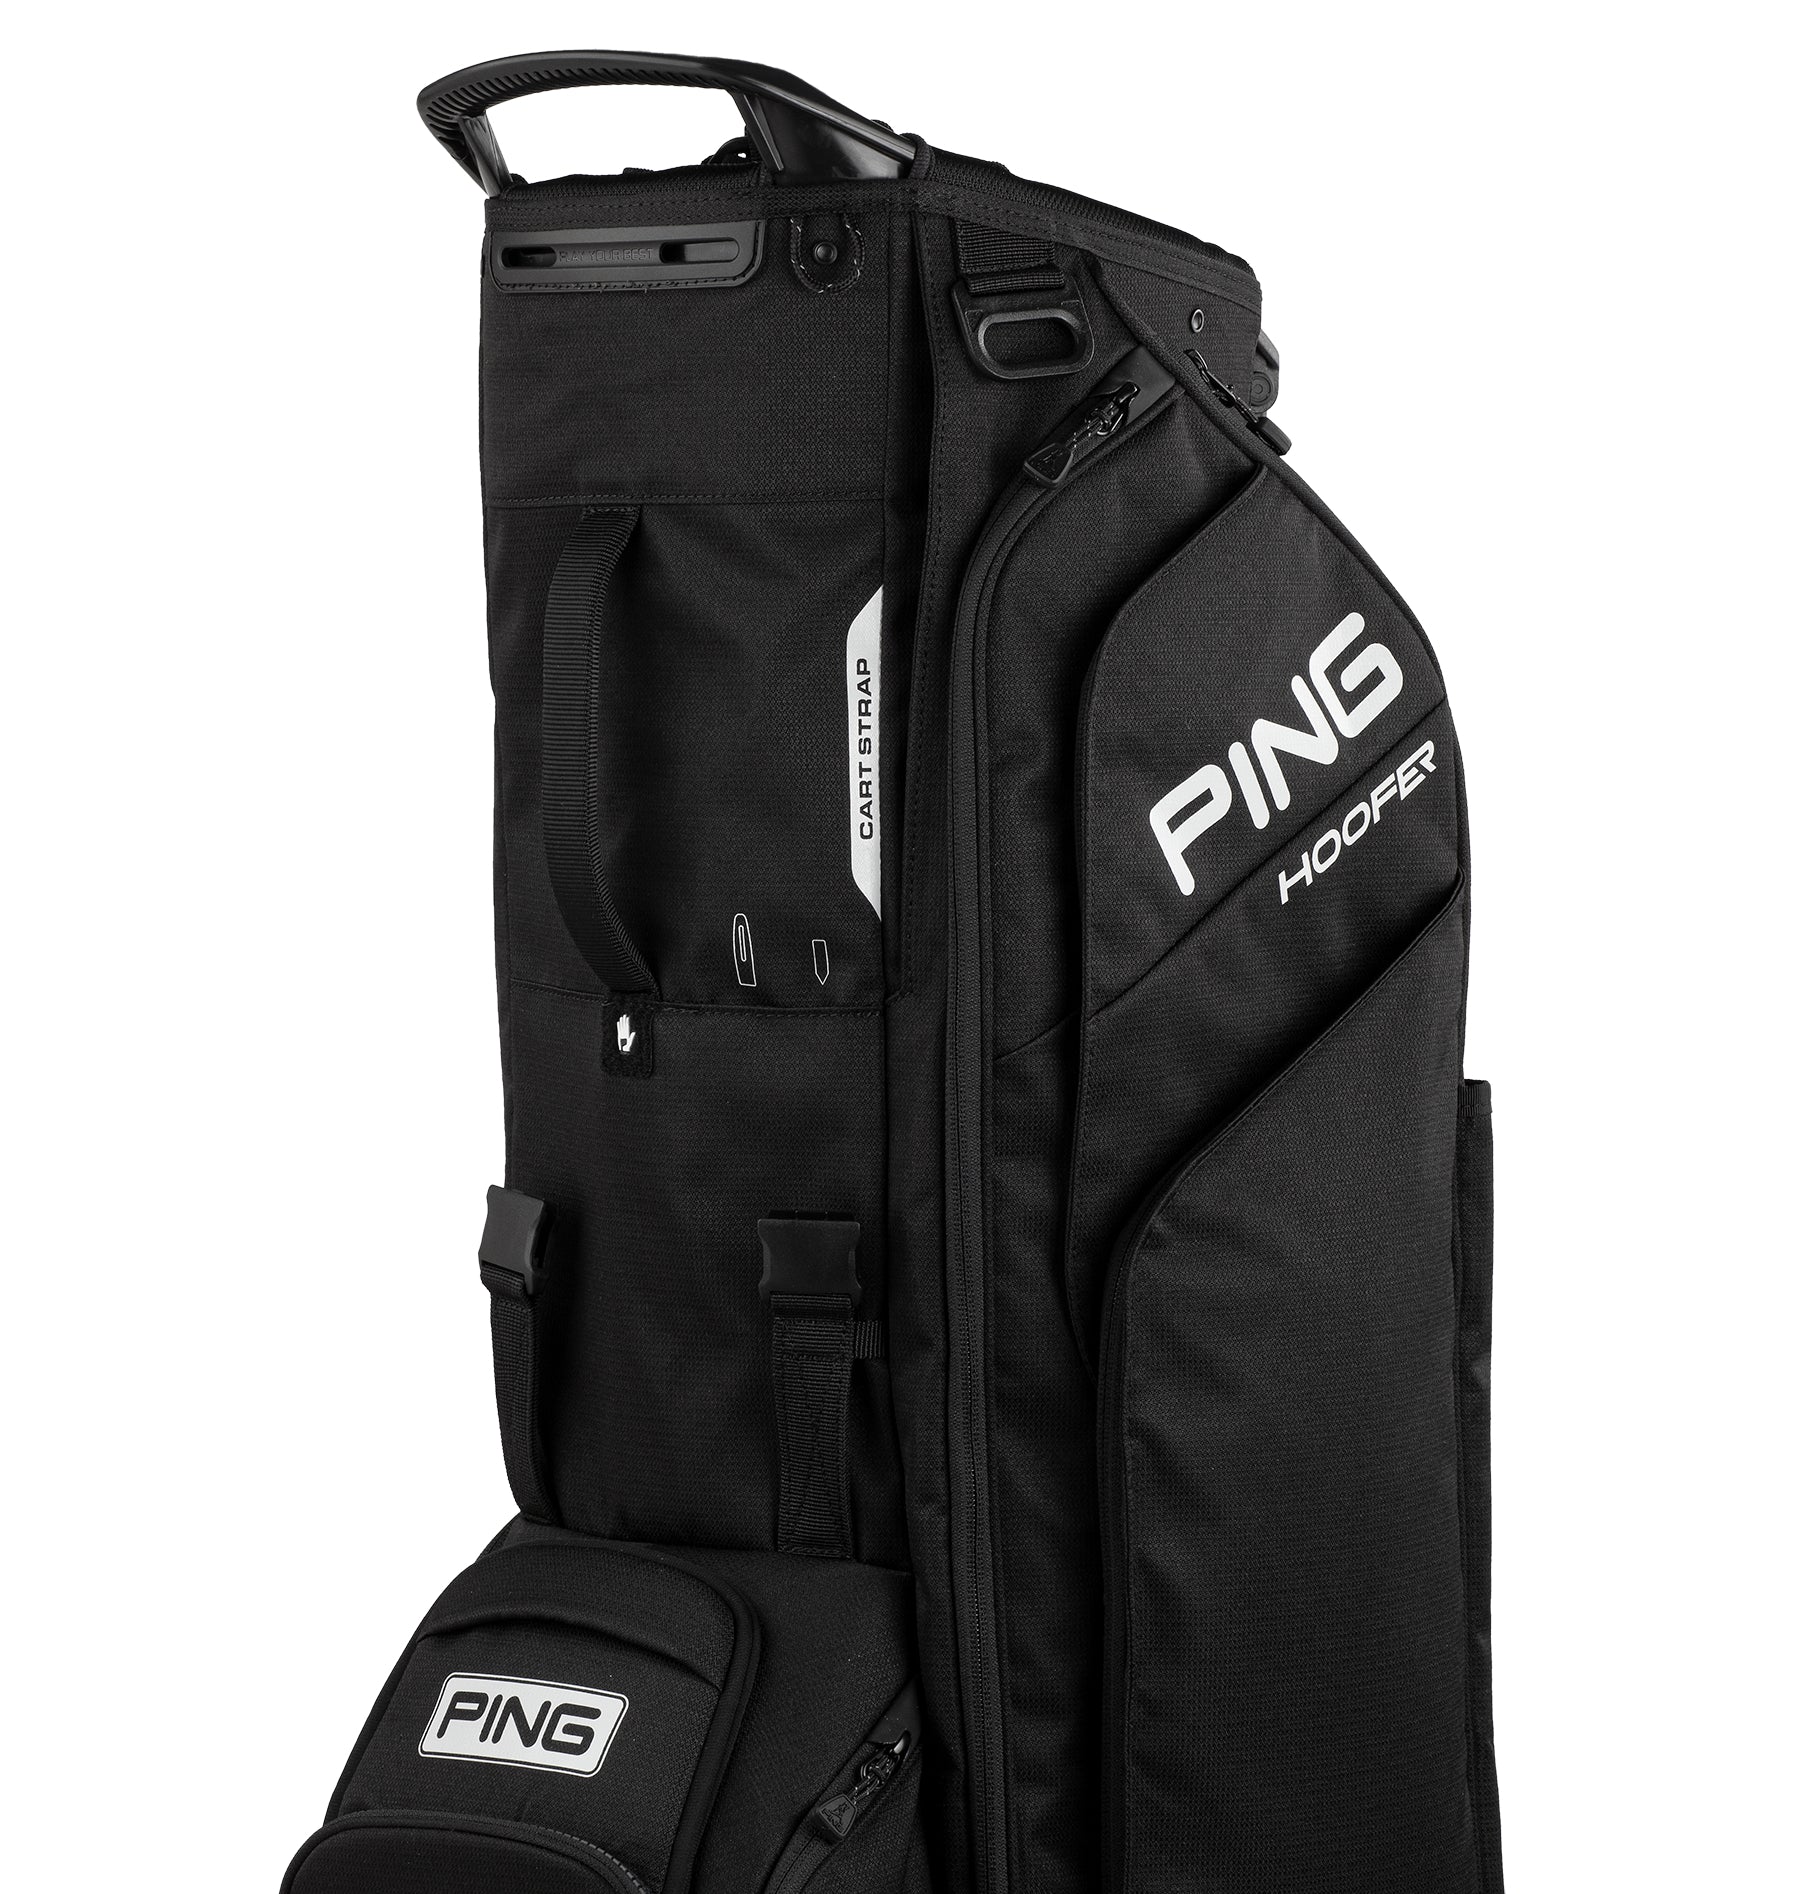 Ping Hoofer Golf Stand Bag